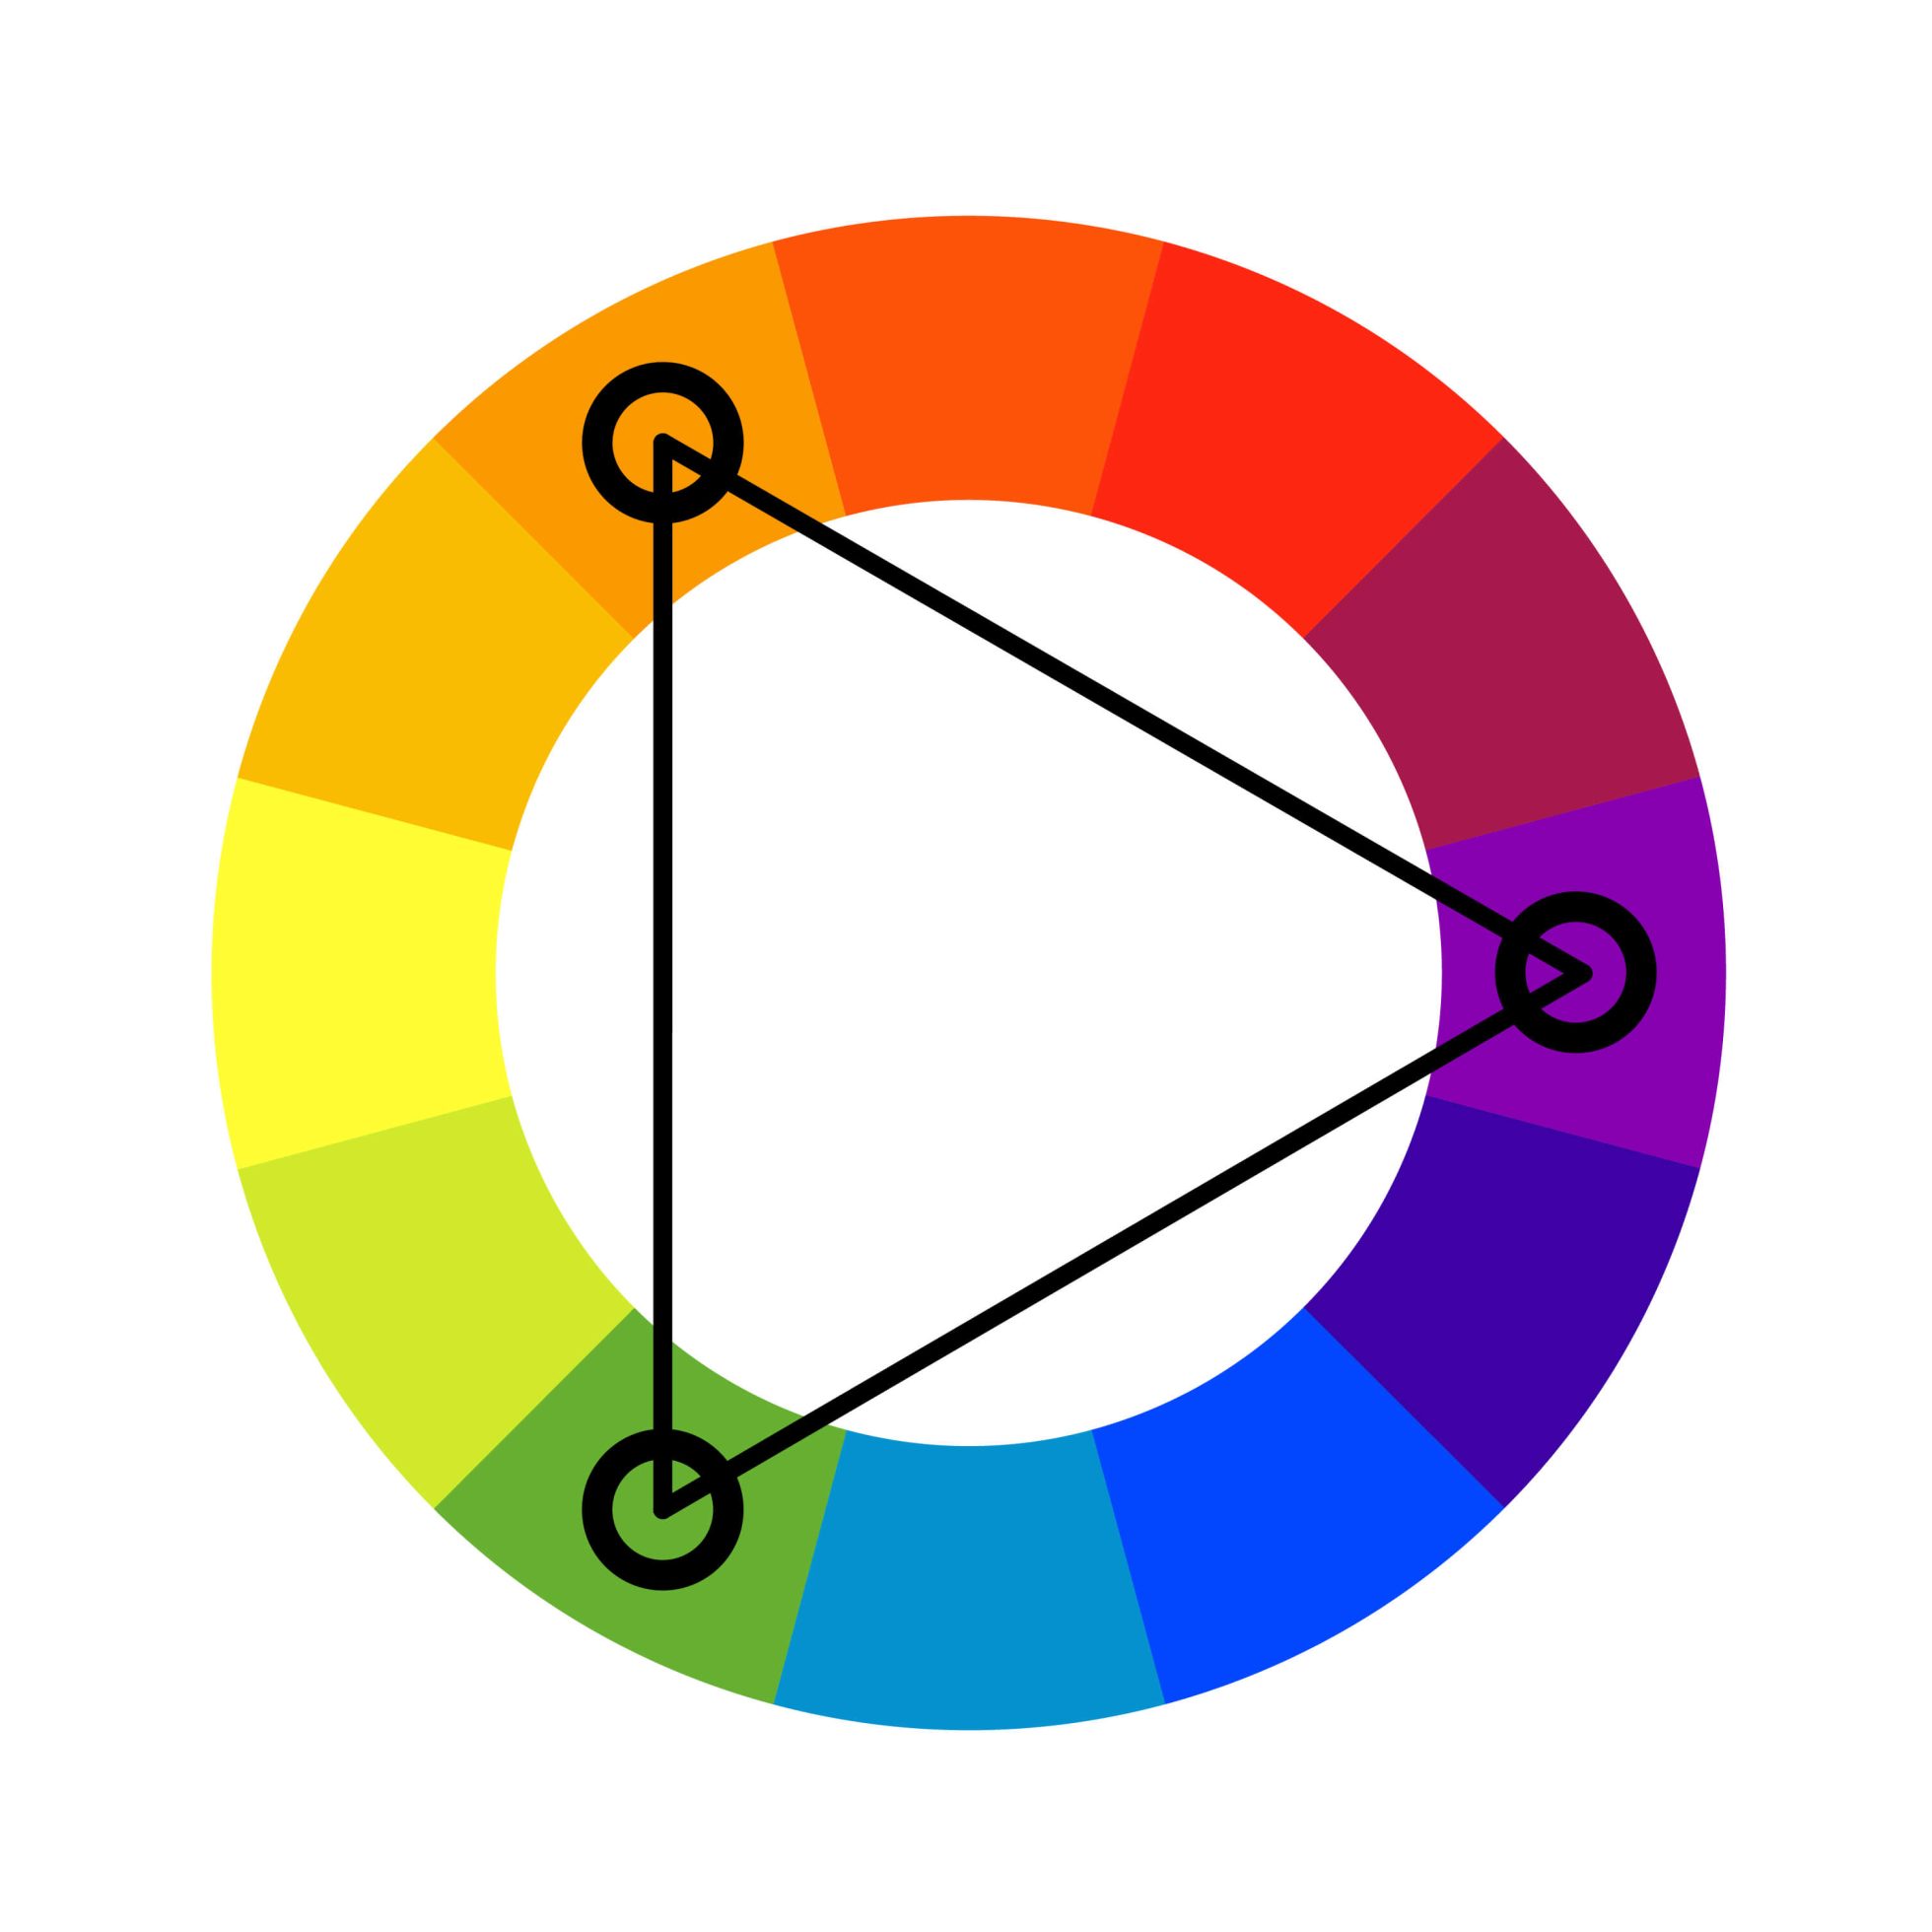 triadic colour wheel